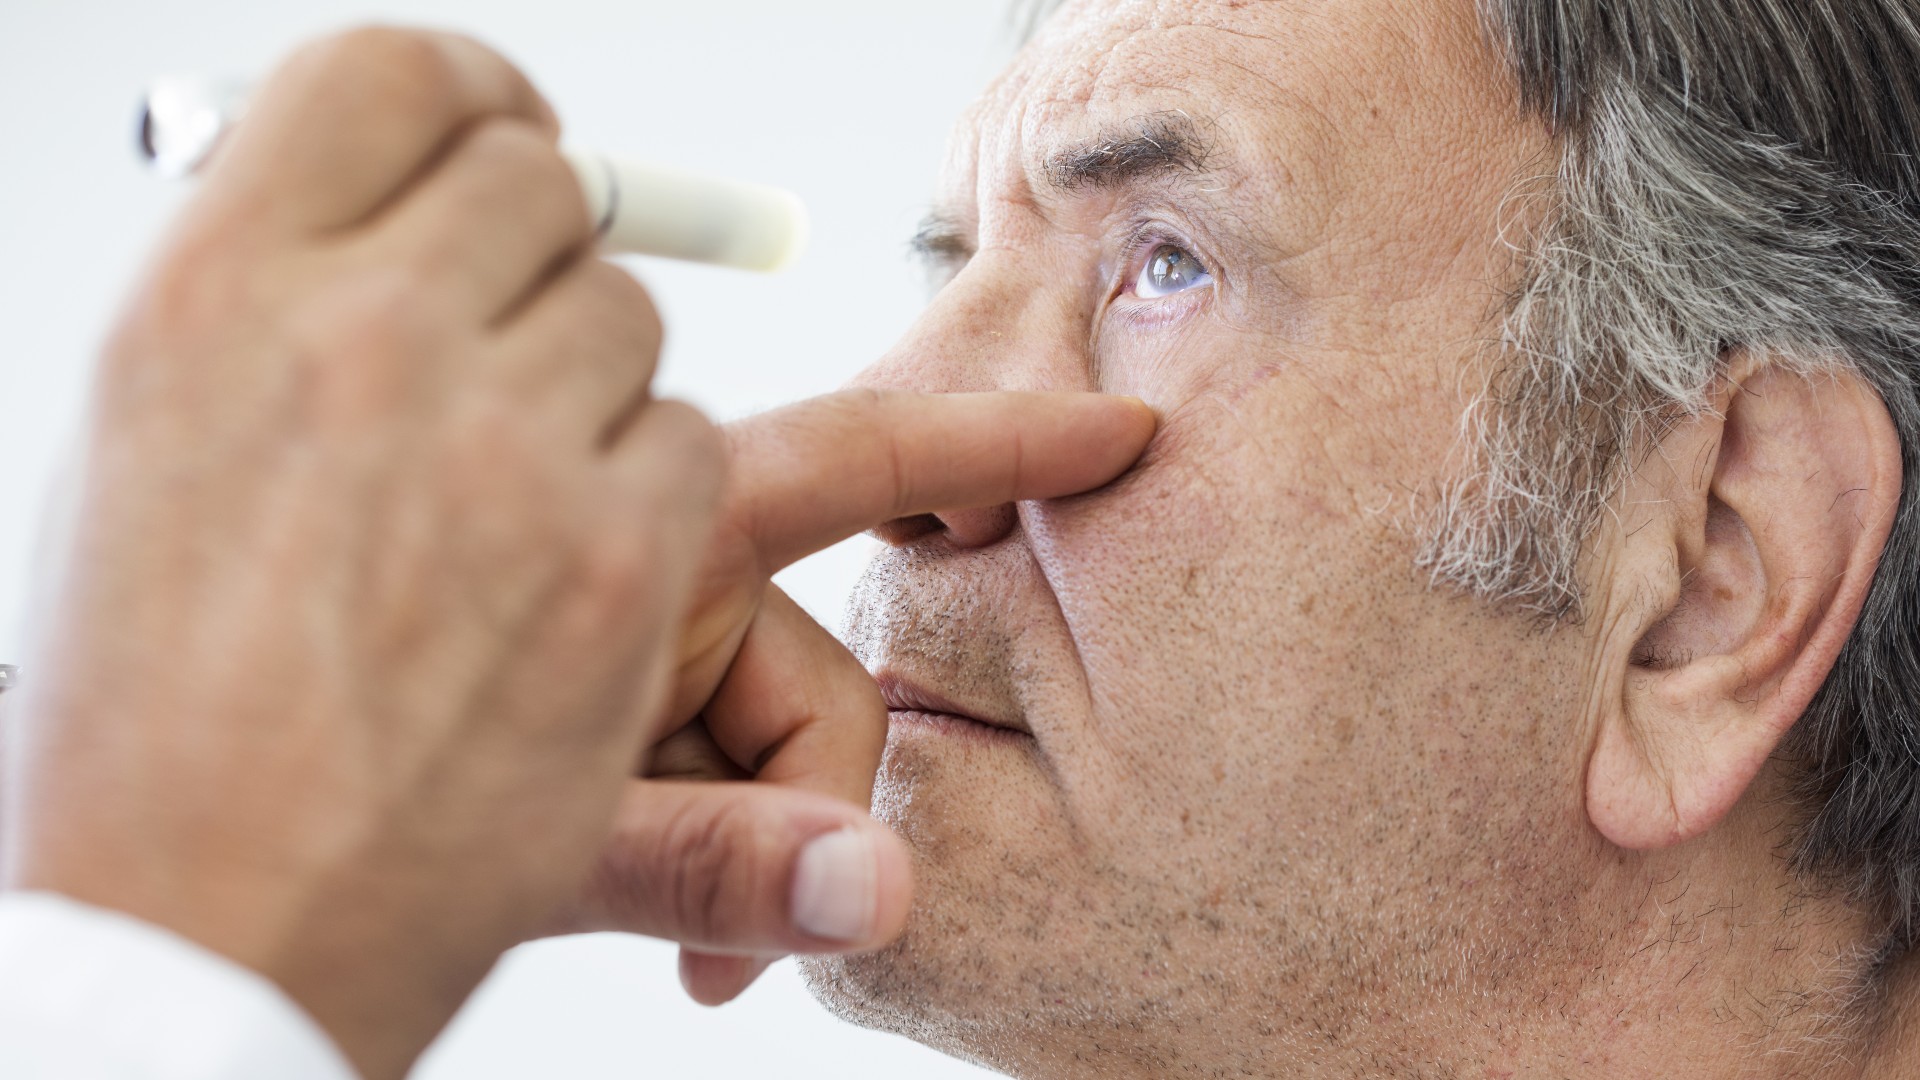 Elderly man examined by an ophthalmologist. sebra via Shutterstock